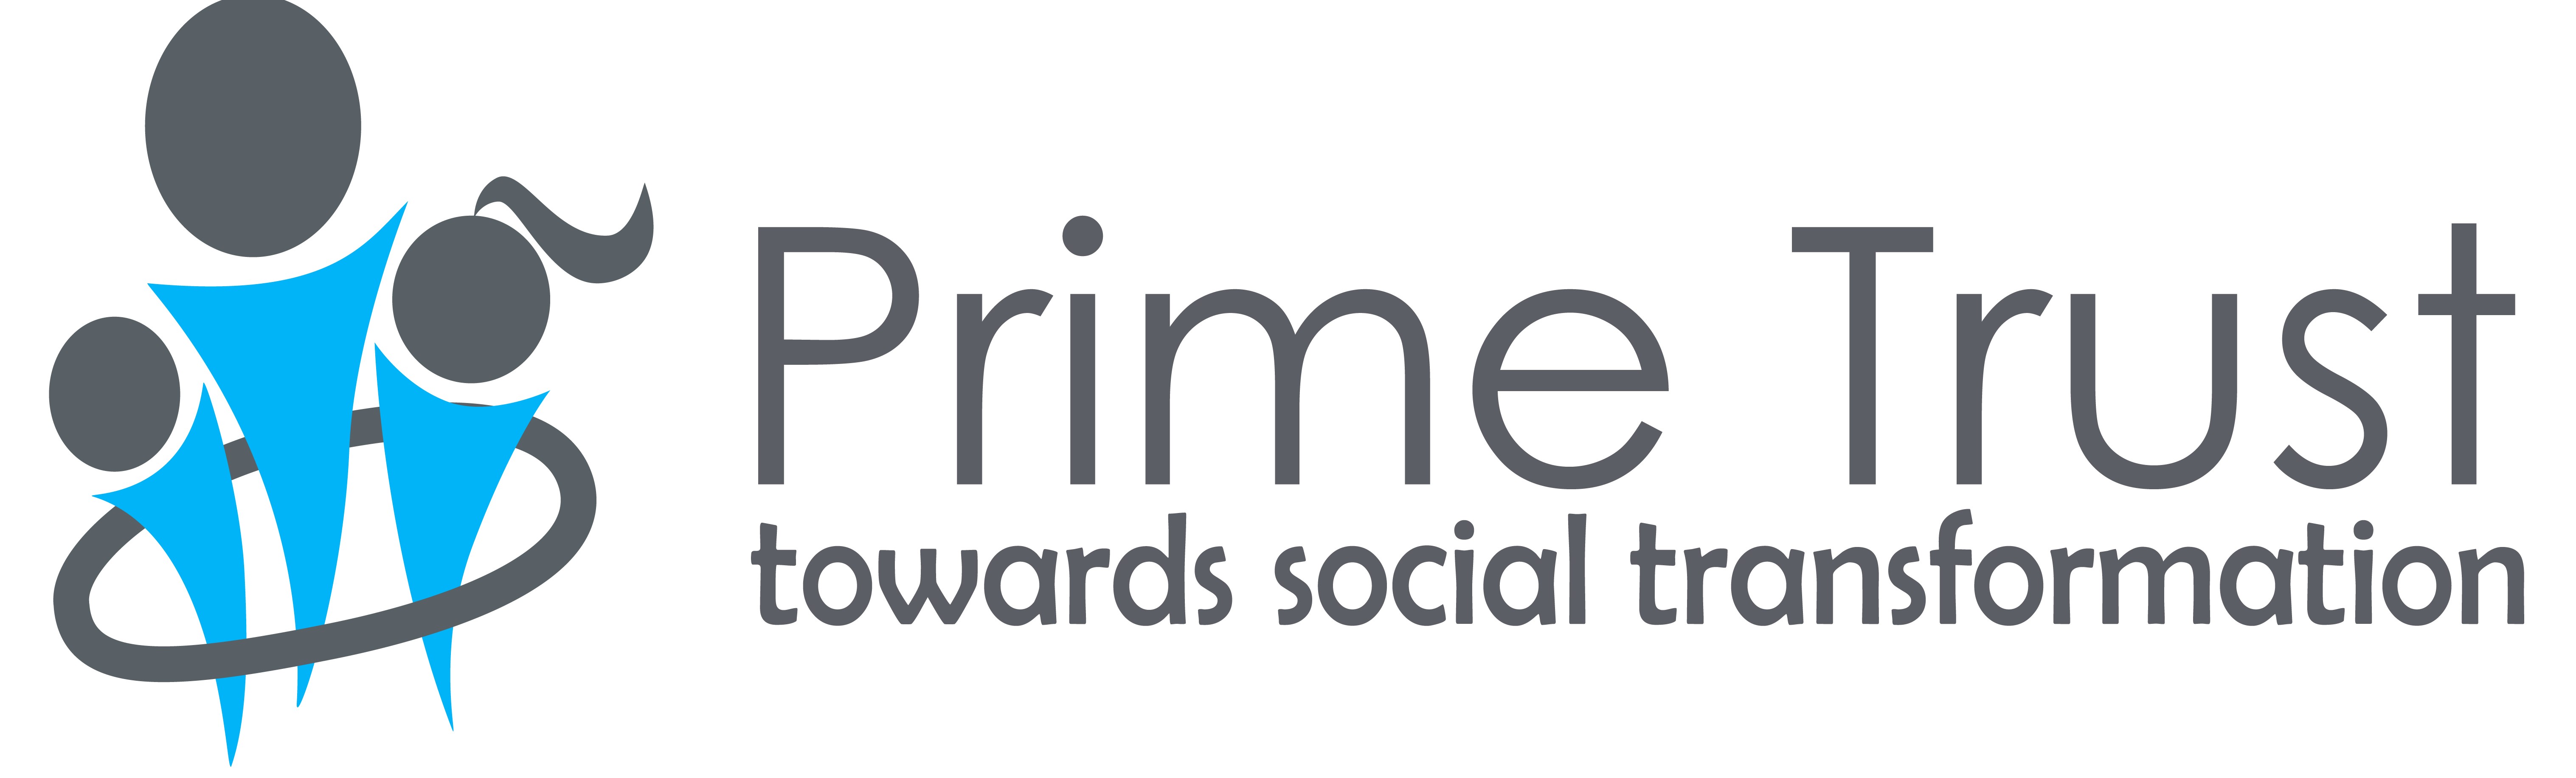 Prime Educational and Social Trust logo